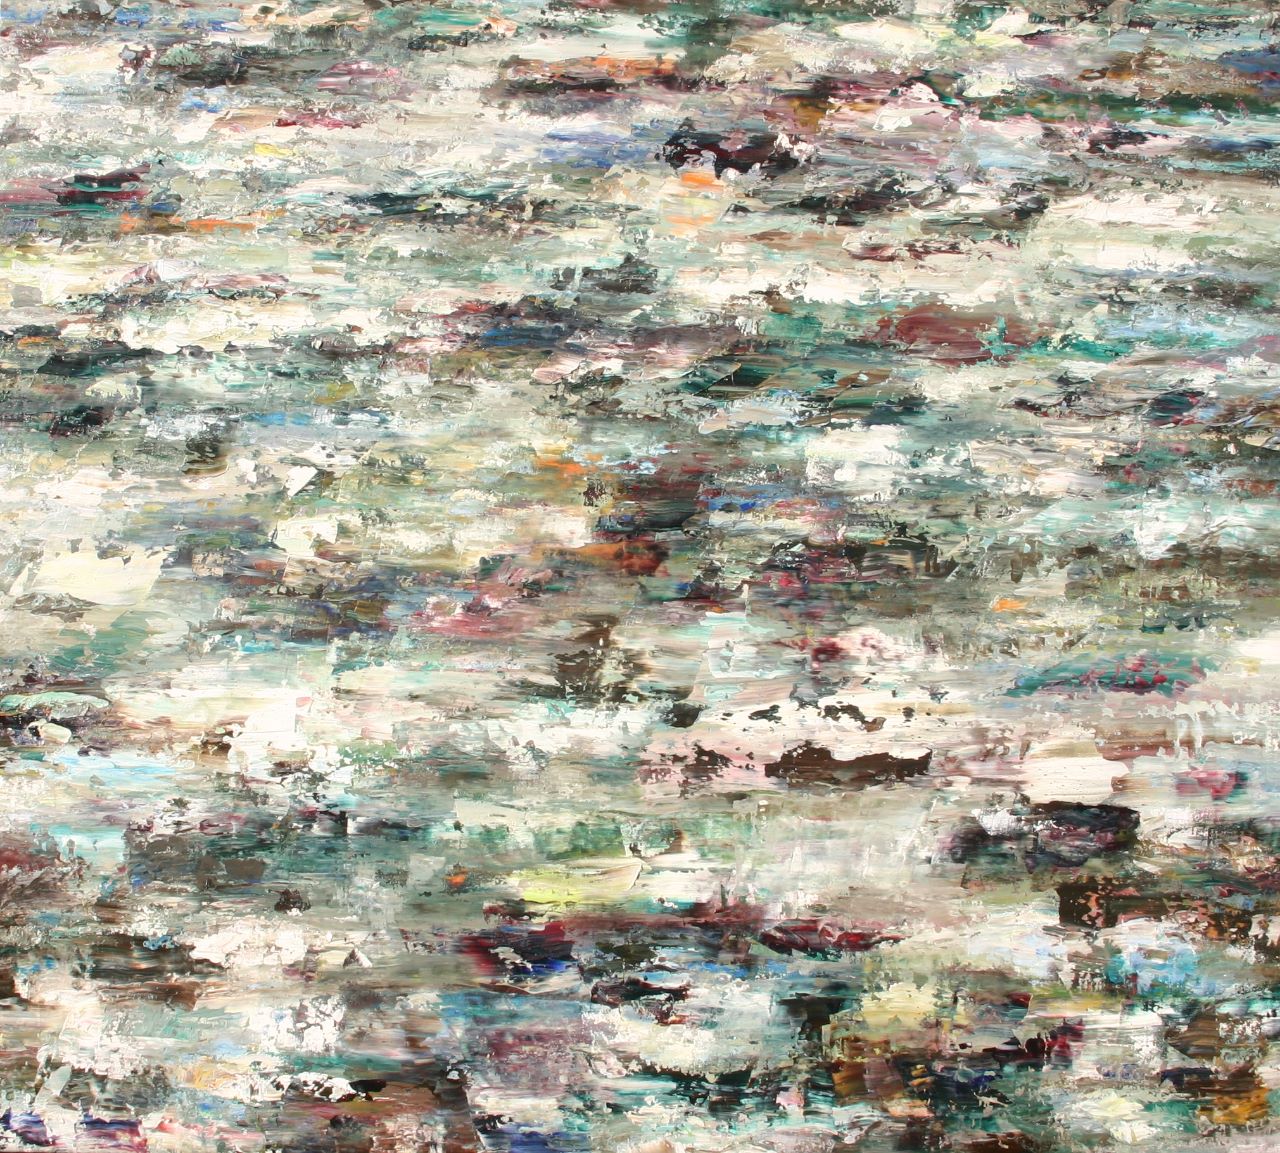 Rudi Weiss, Fluss, 26-2015, Öl auf Leinwand, 130 cm x 145 cm, wer021ko